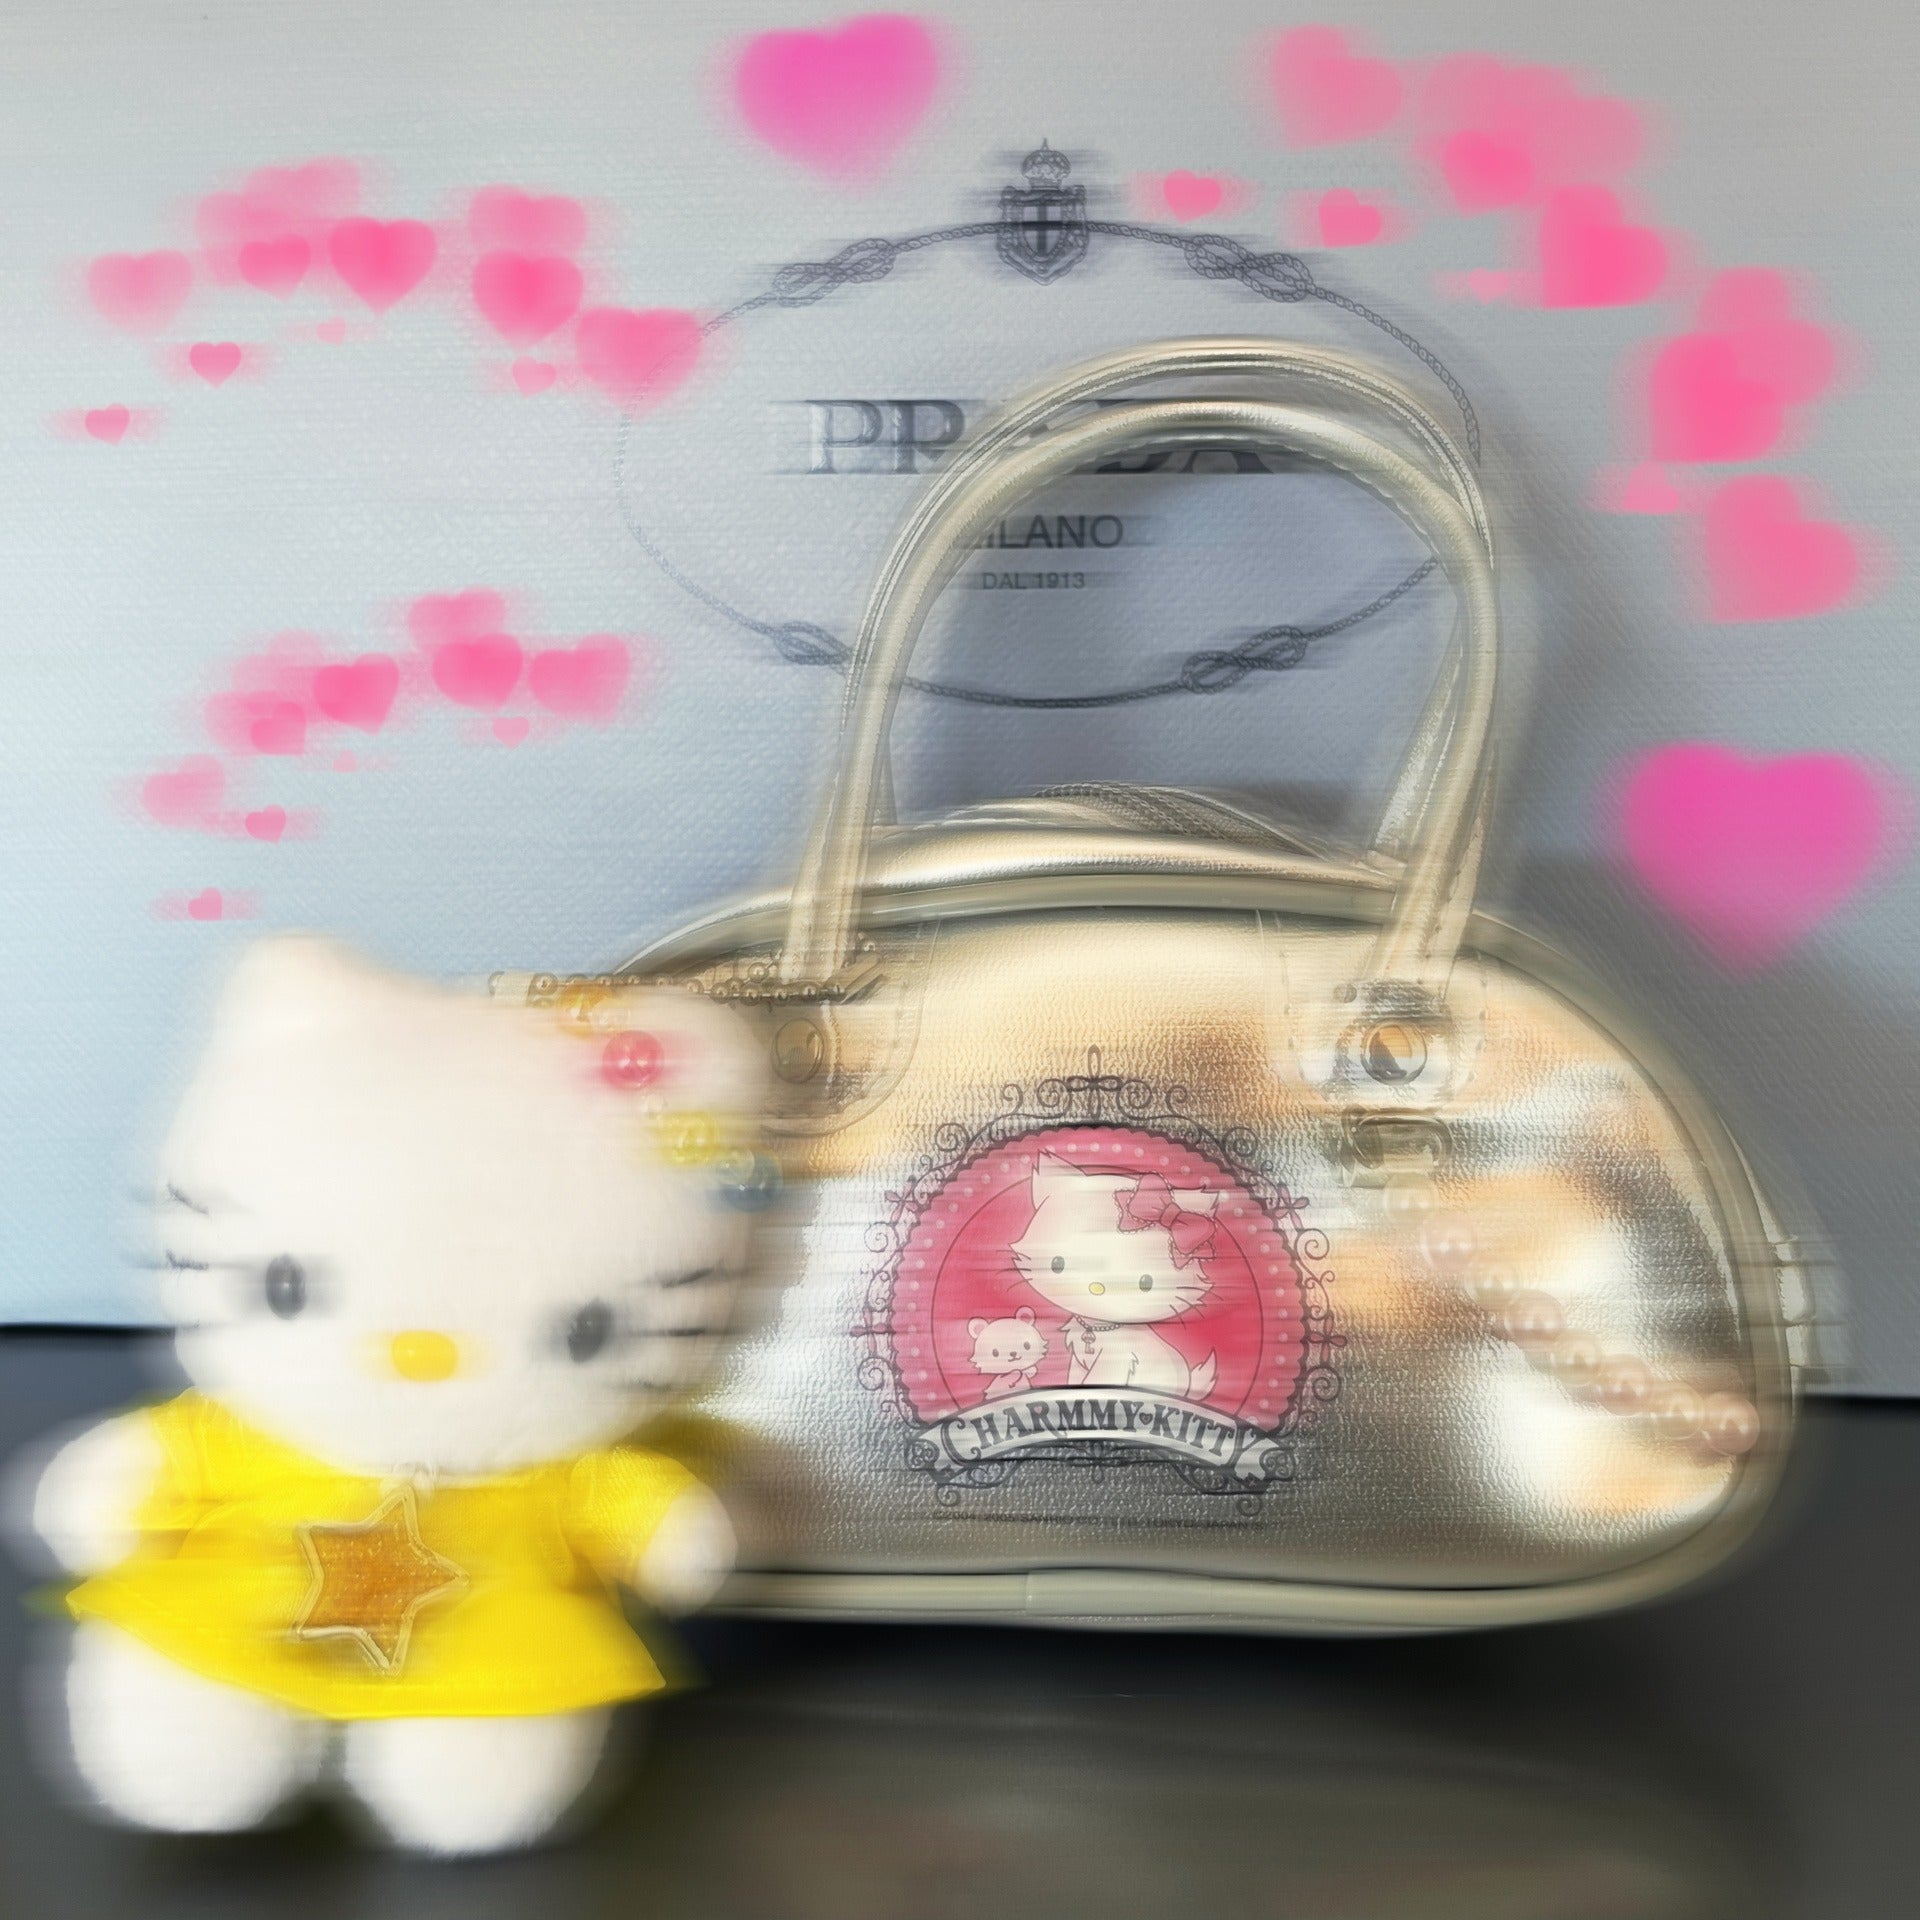 Hello Kitty Knitting Tote Bag – In Kawaii Shop